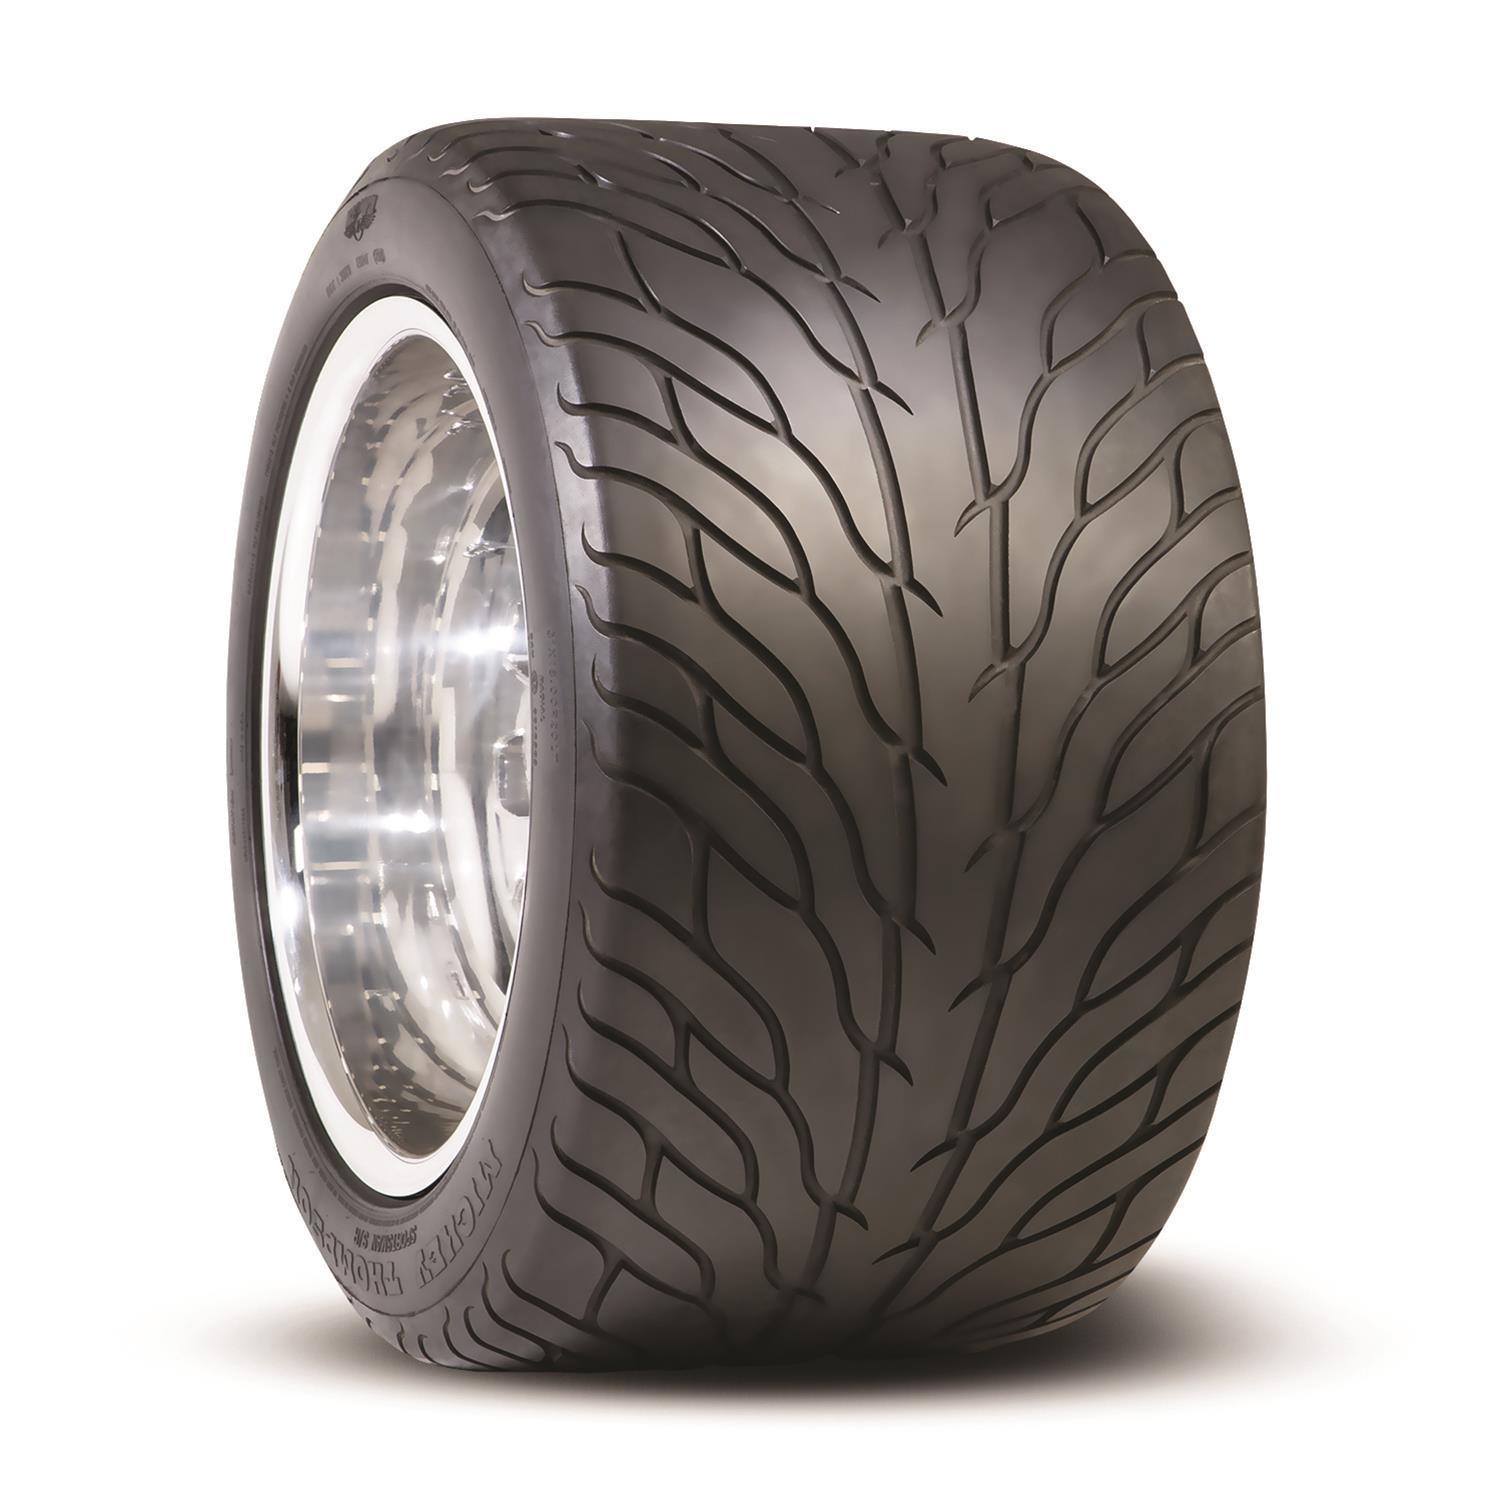 28x12.00R15LT Sportsman S/R Tire - Burlile Performance Products